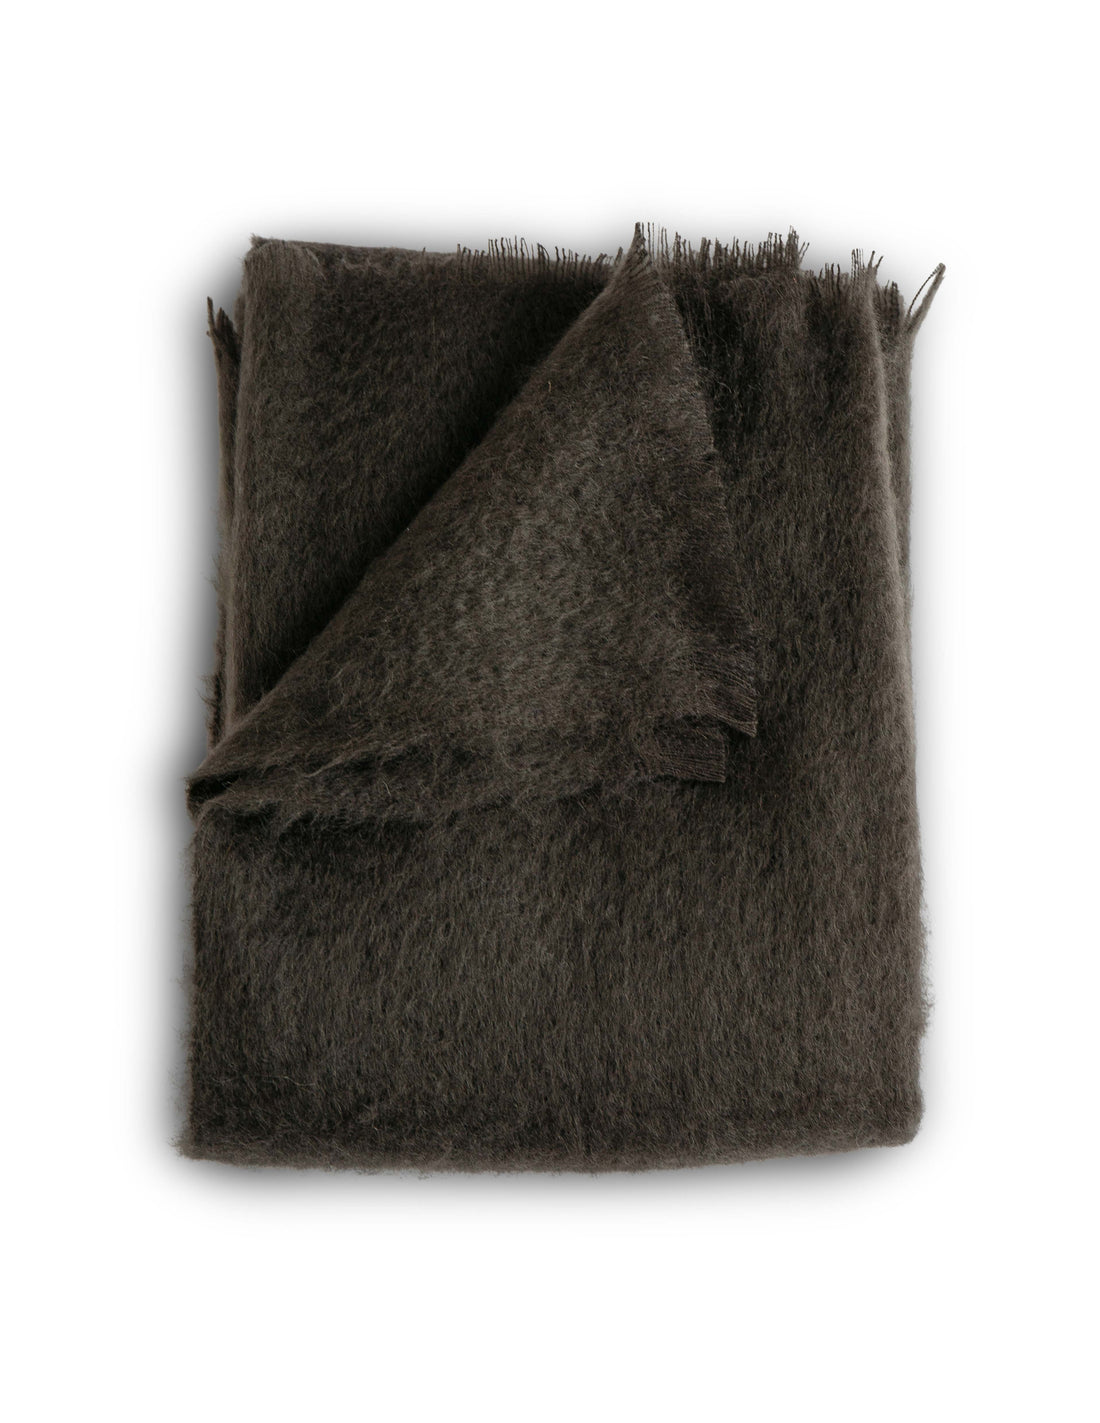 Folded brown mohair throw blanket. 